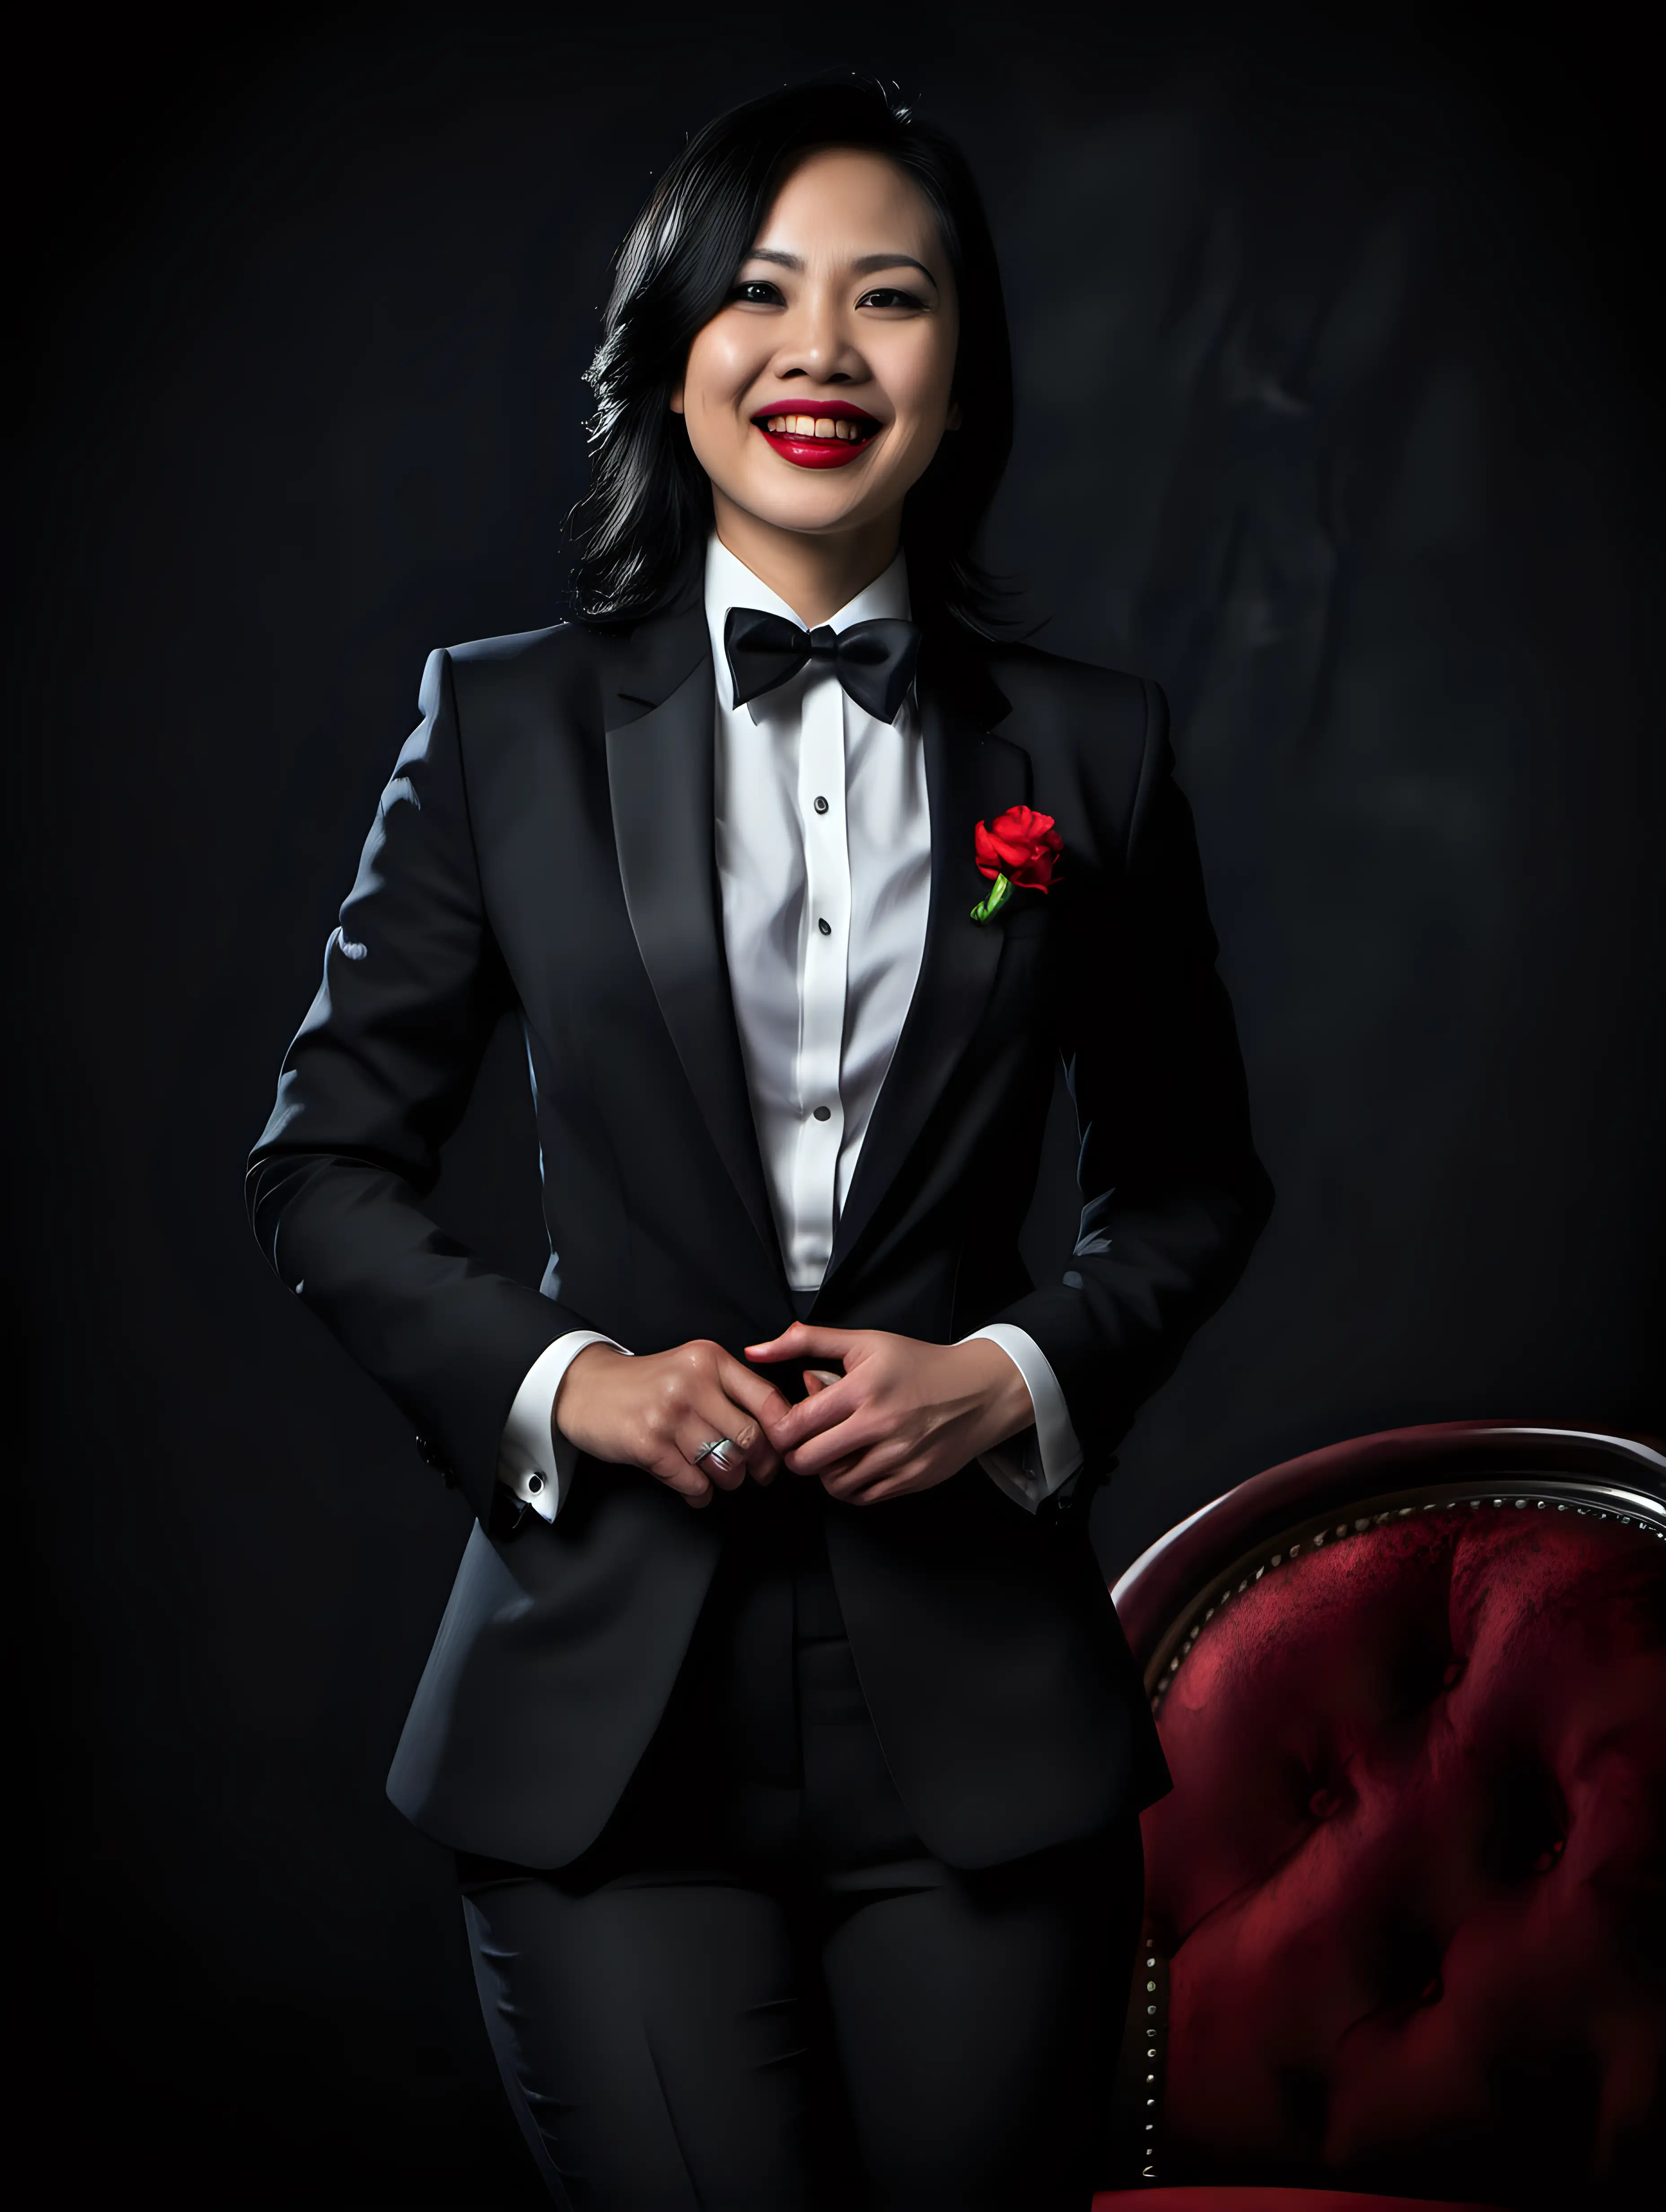 Elegant-Vietnamese-Woman-in-Tuxedo-Smiling-in-Dimly-Lit-Room